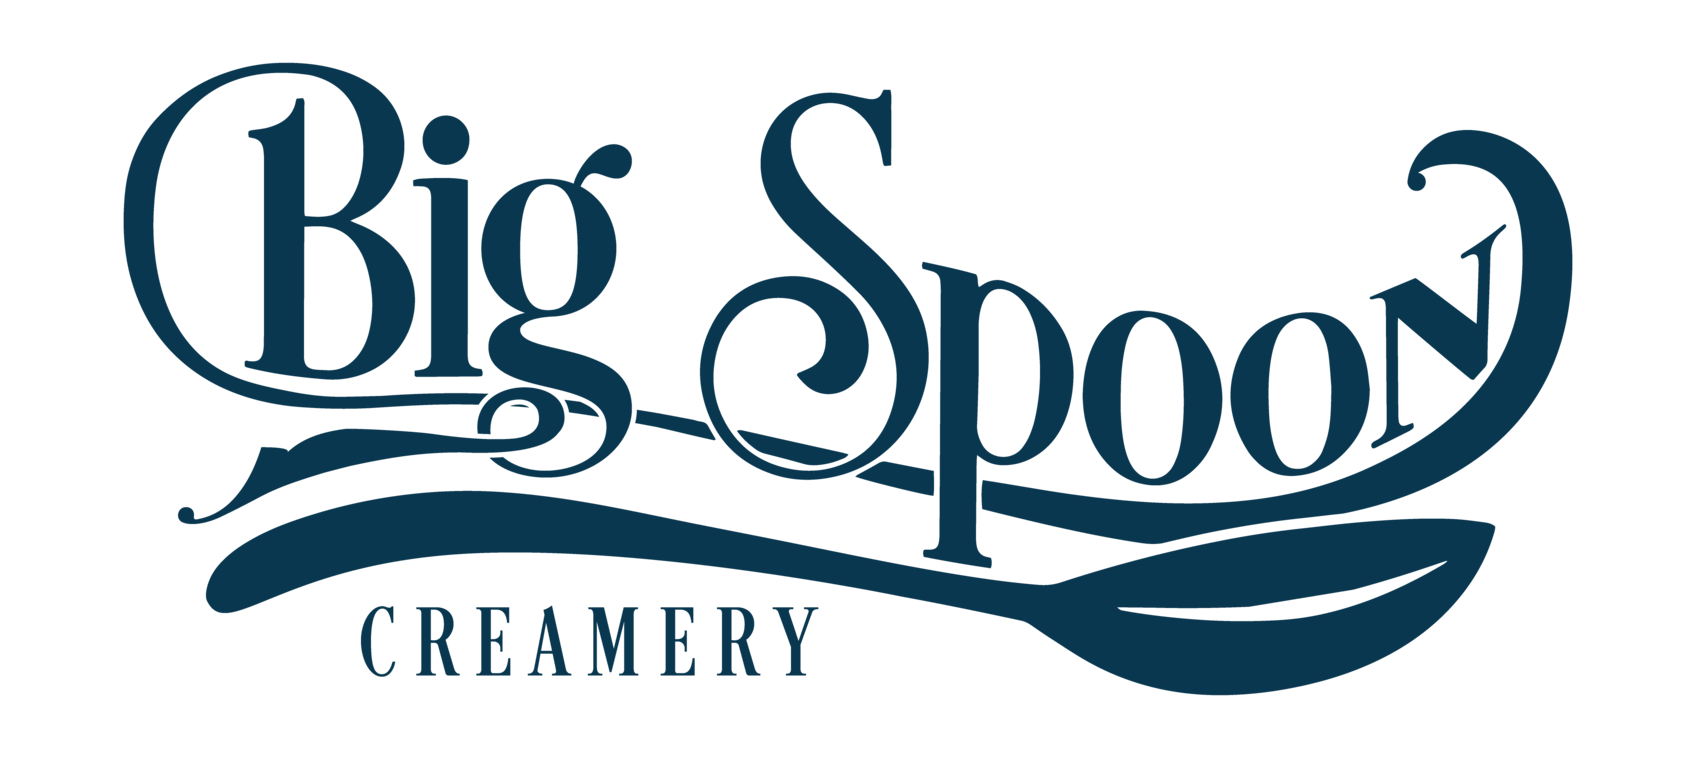 Big+Spoon+Creamery_Master+Logo-01.png